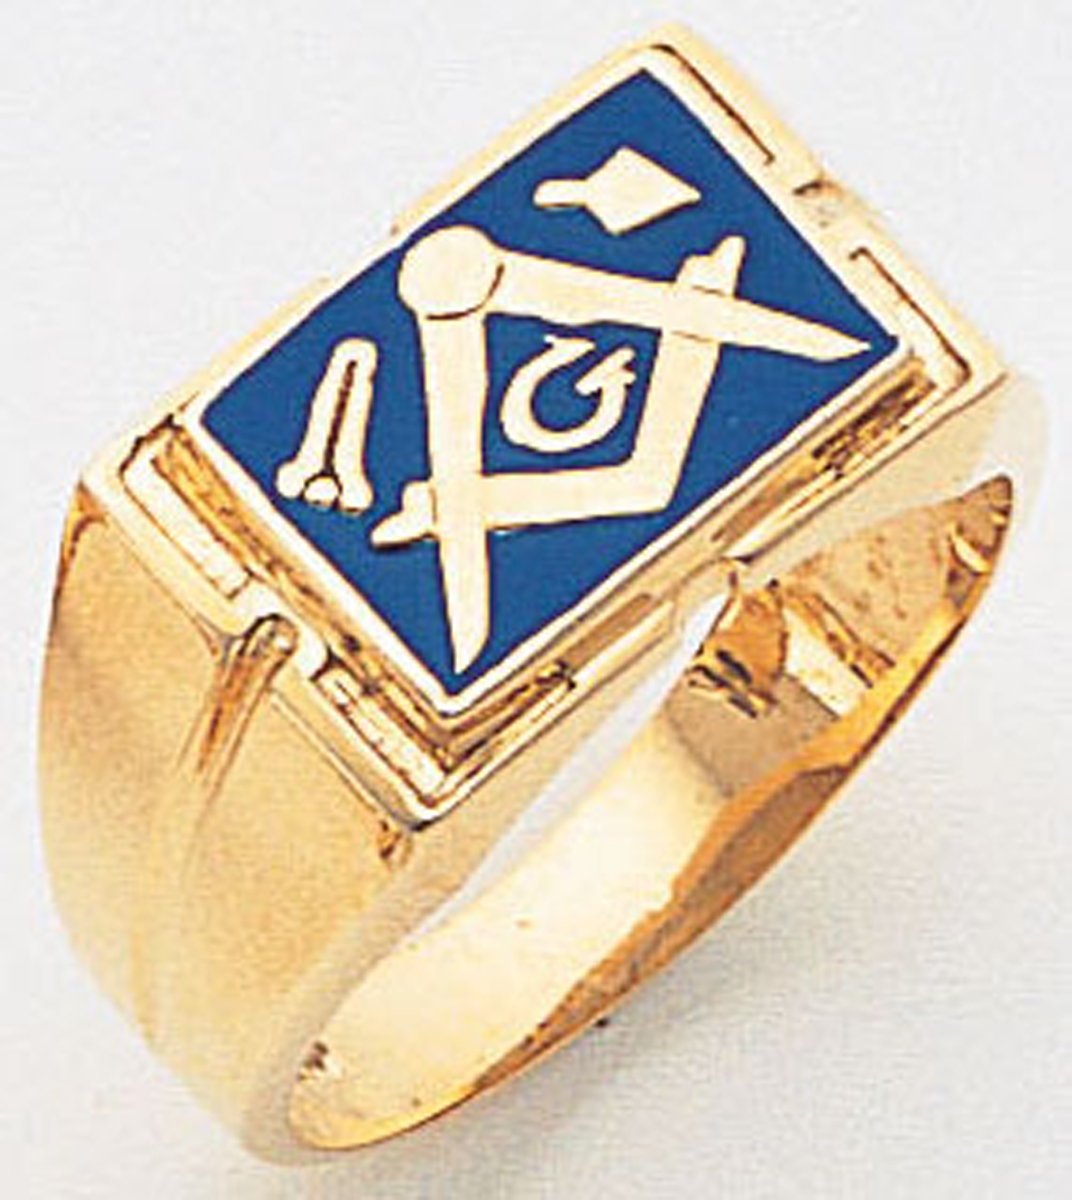 Gold Masonic Ring Solid Back 3212